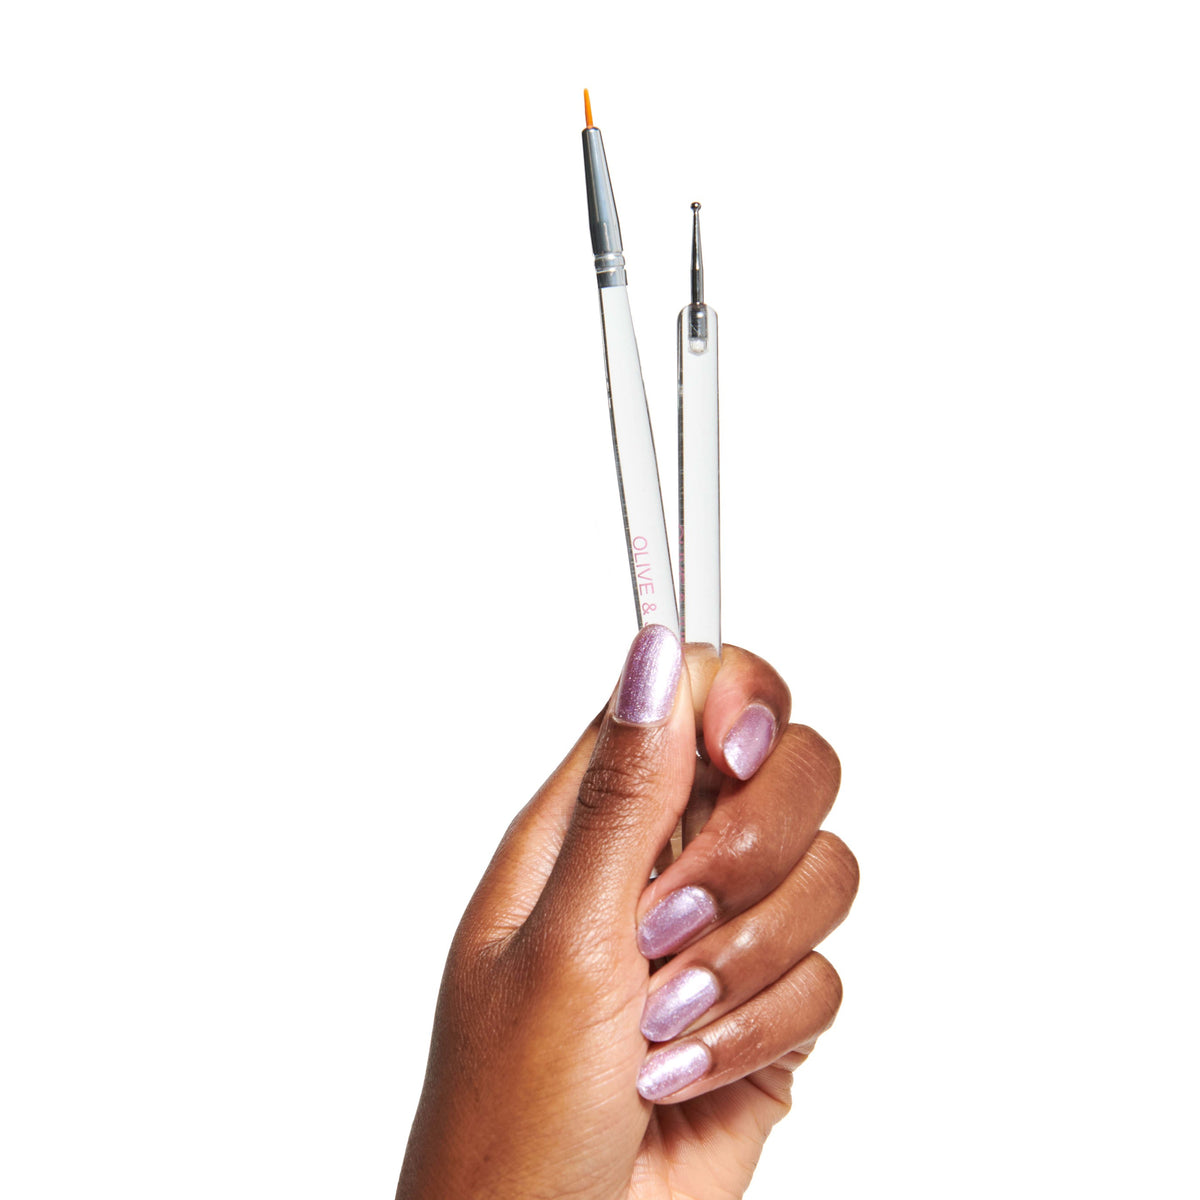 Precision Nail Art Tools - 2 Way Set for Artists